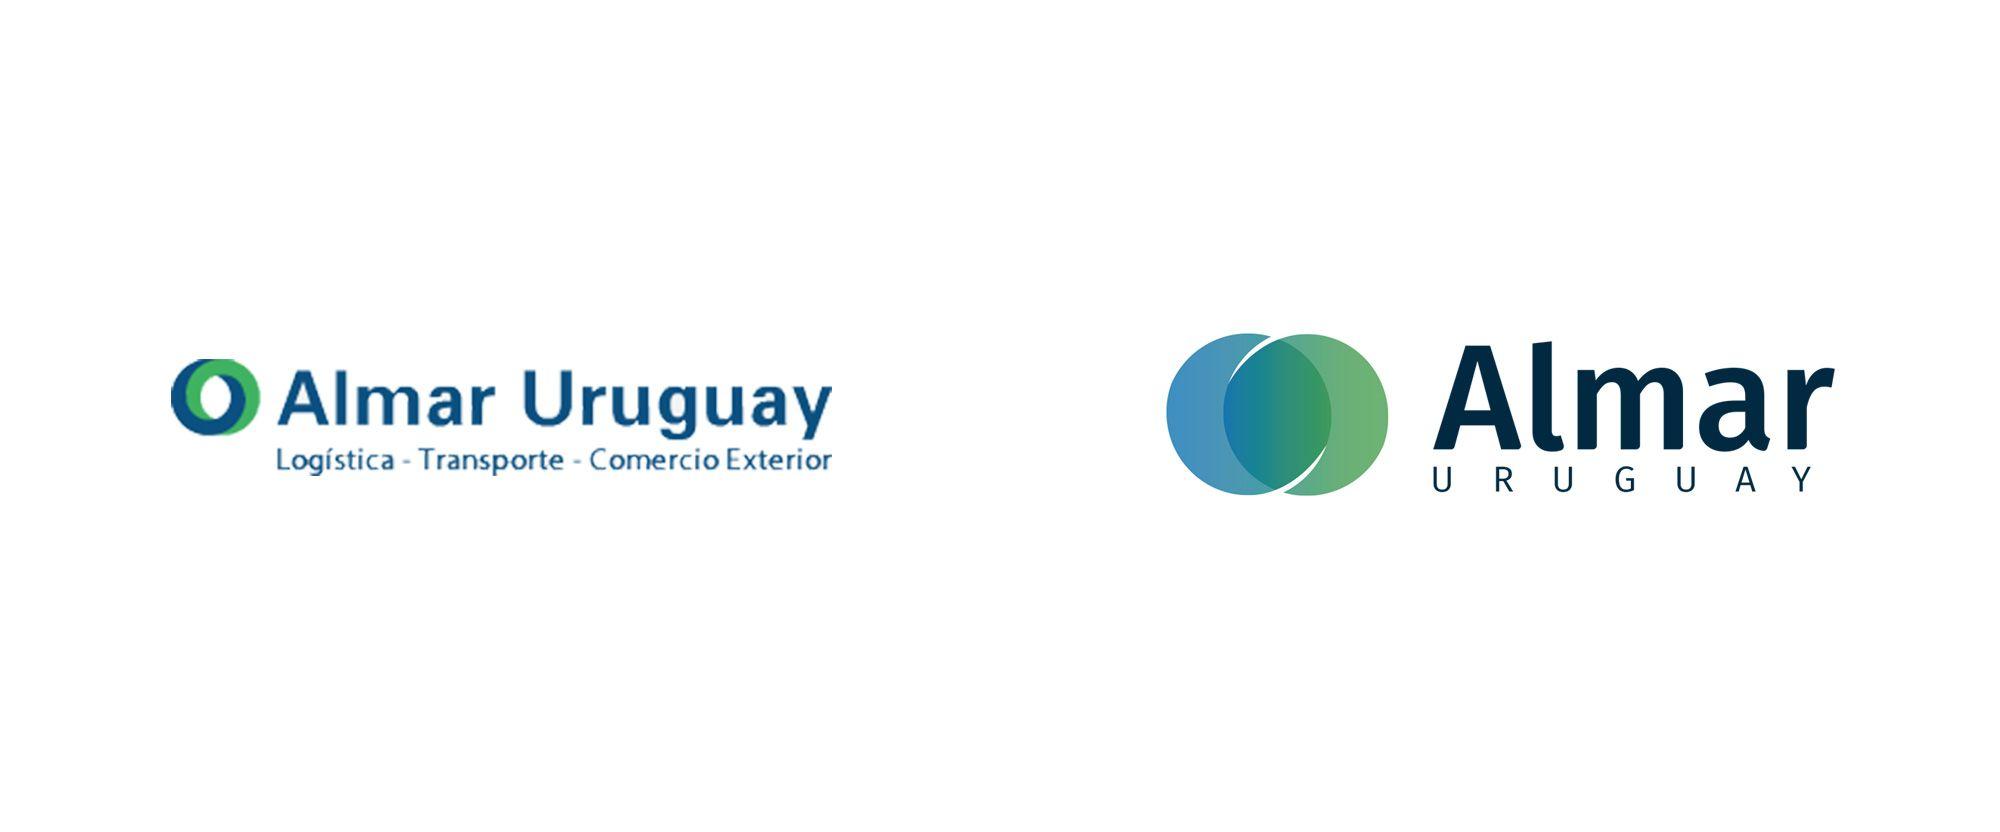 Uruguay Logo - Brand New: New Logo for Almar Uruguay